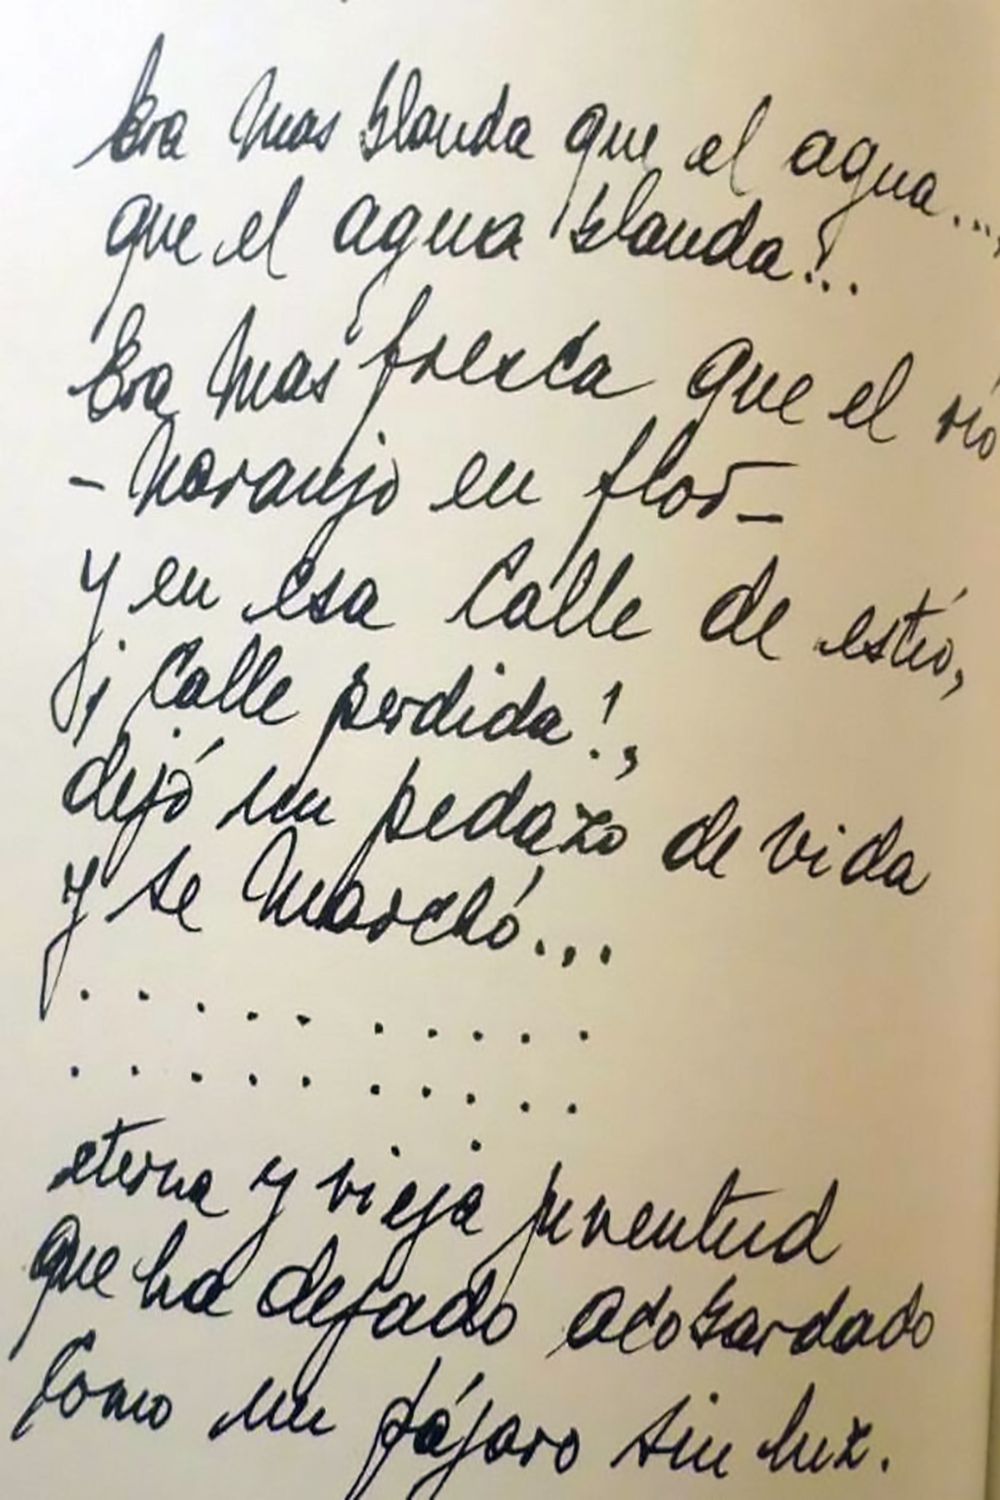 "Naranjo en flor", lyrics' manuscript.